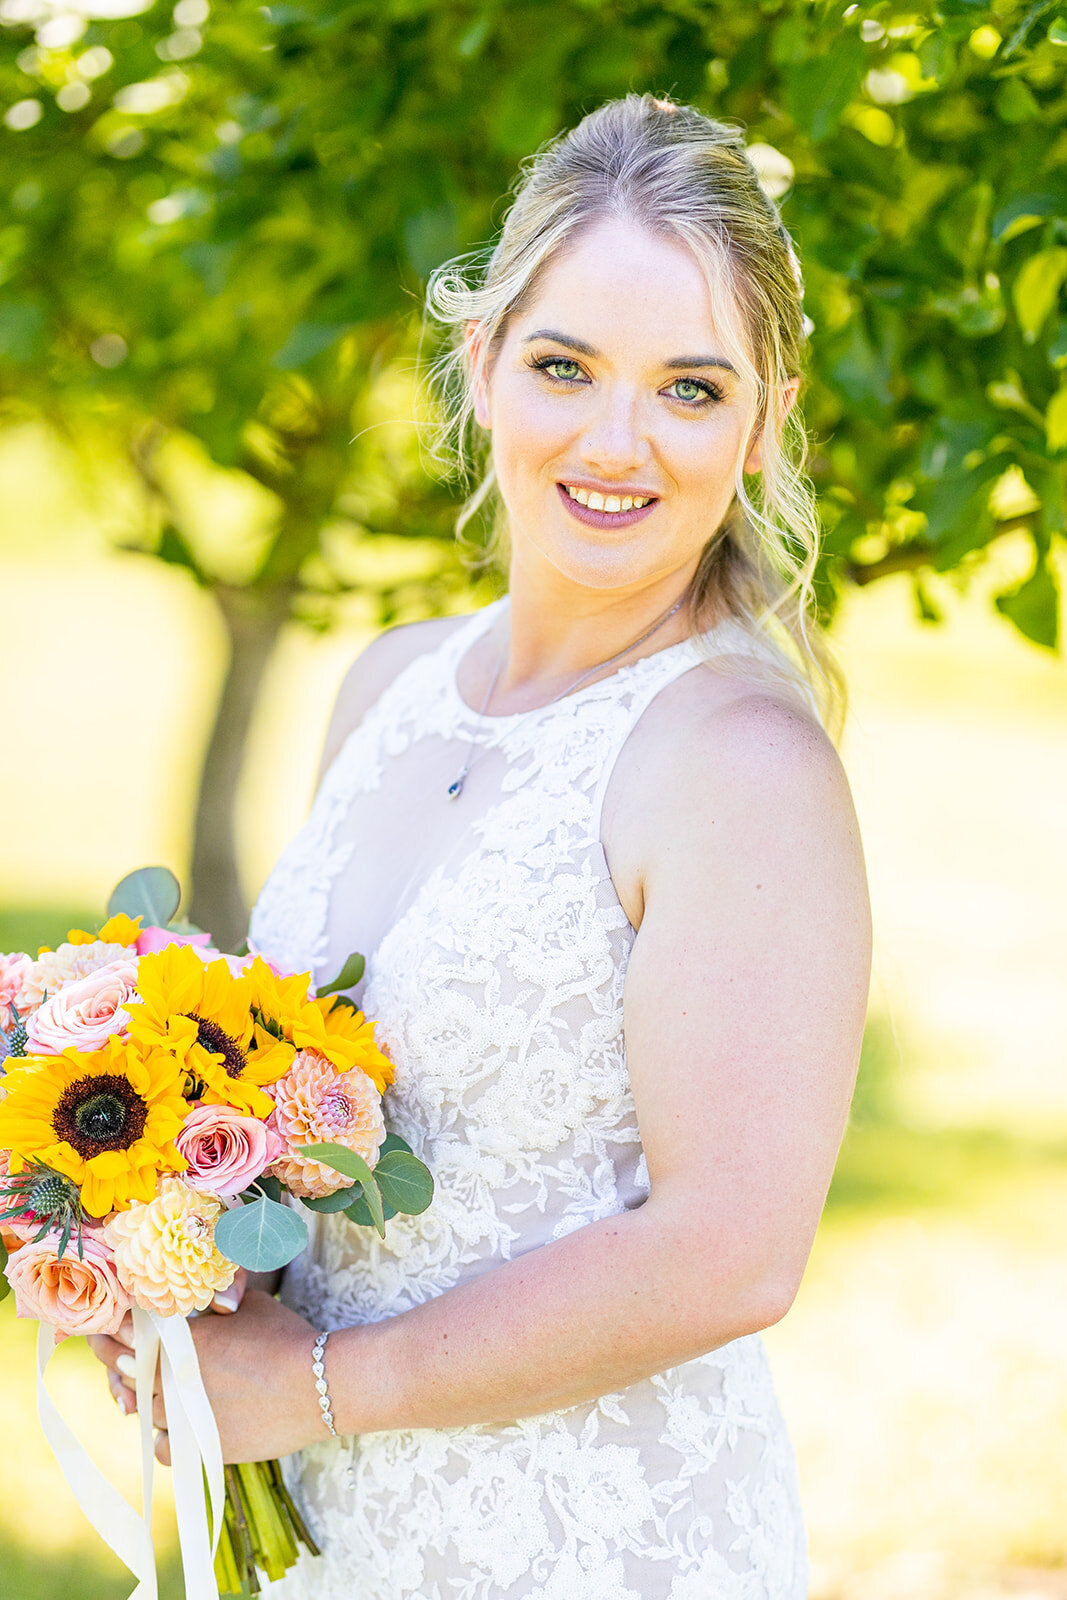 Bridal portrait with flowers